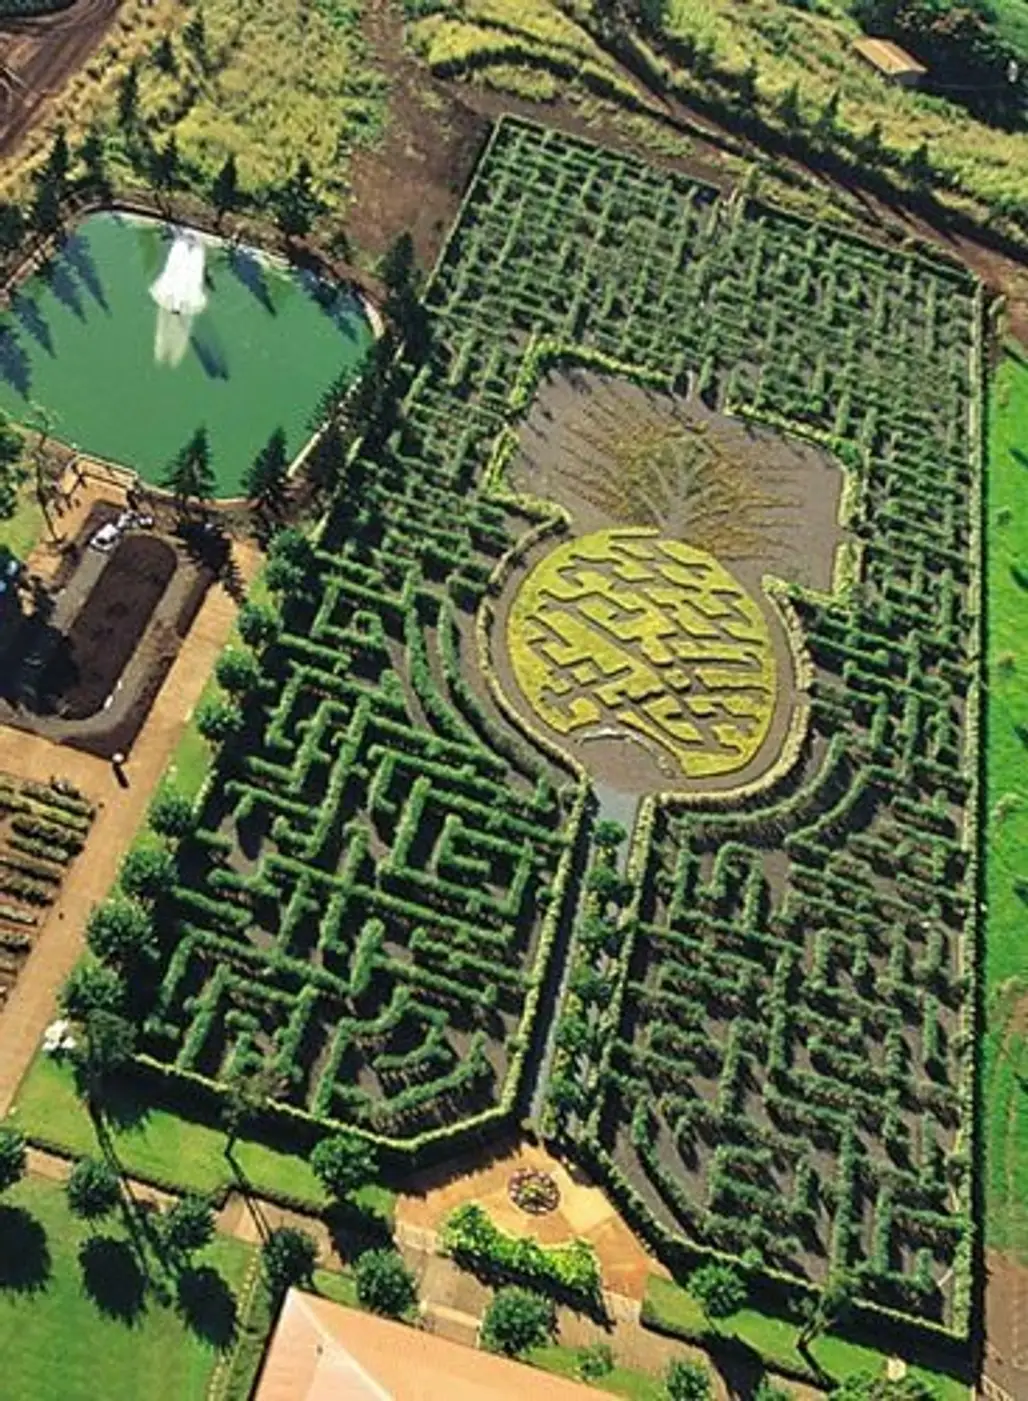 The Pineapple Garden Maze